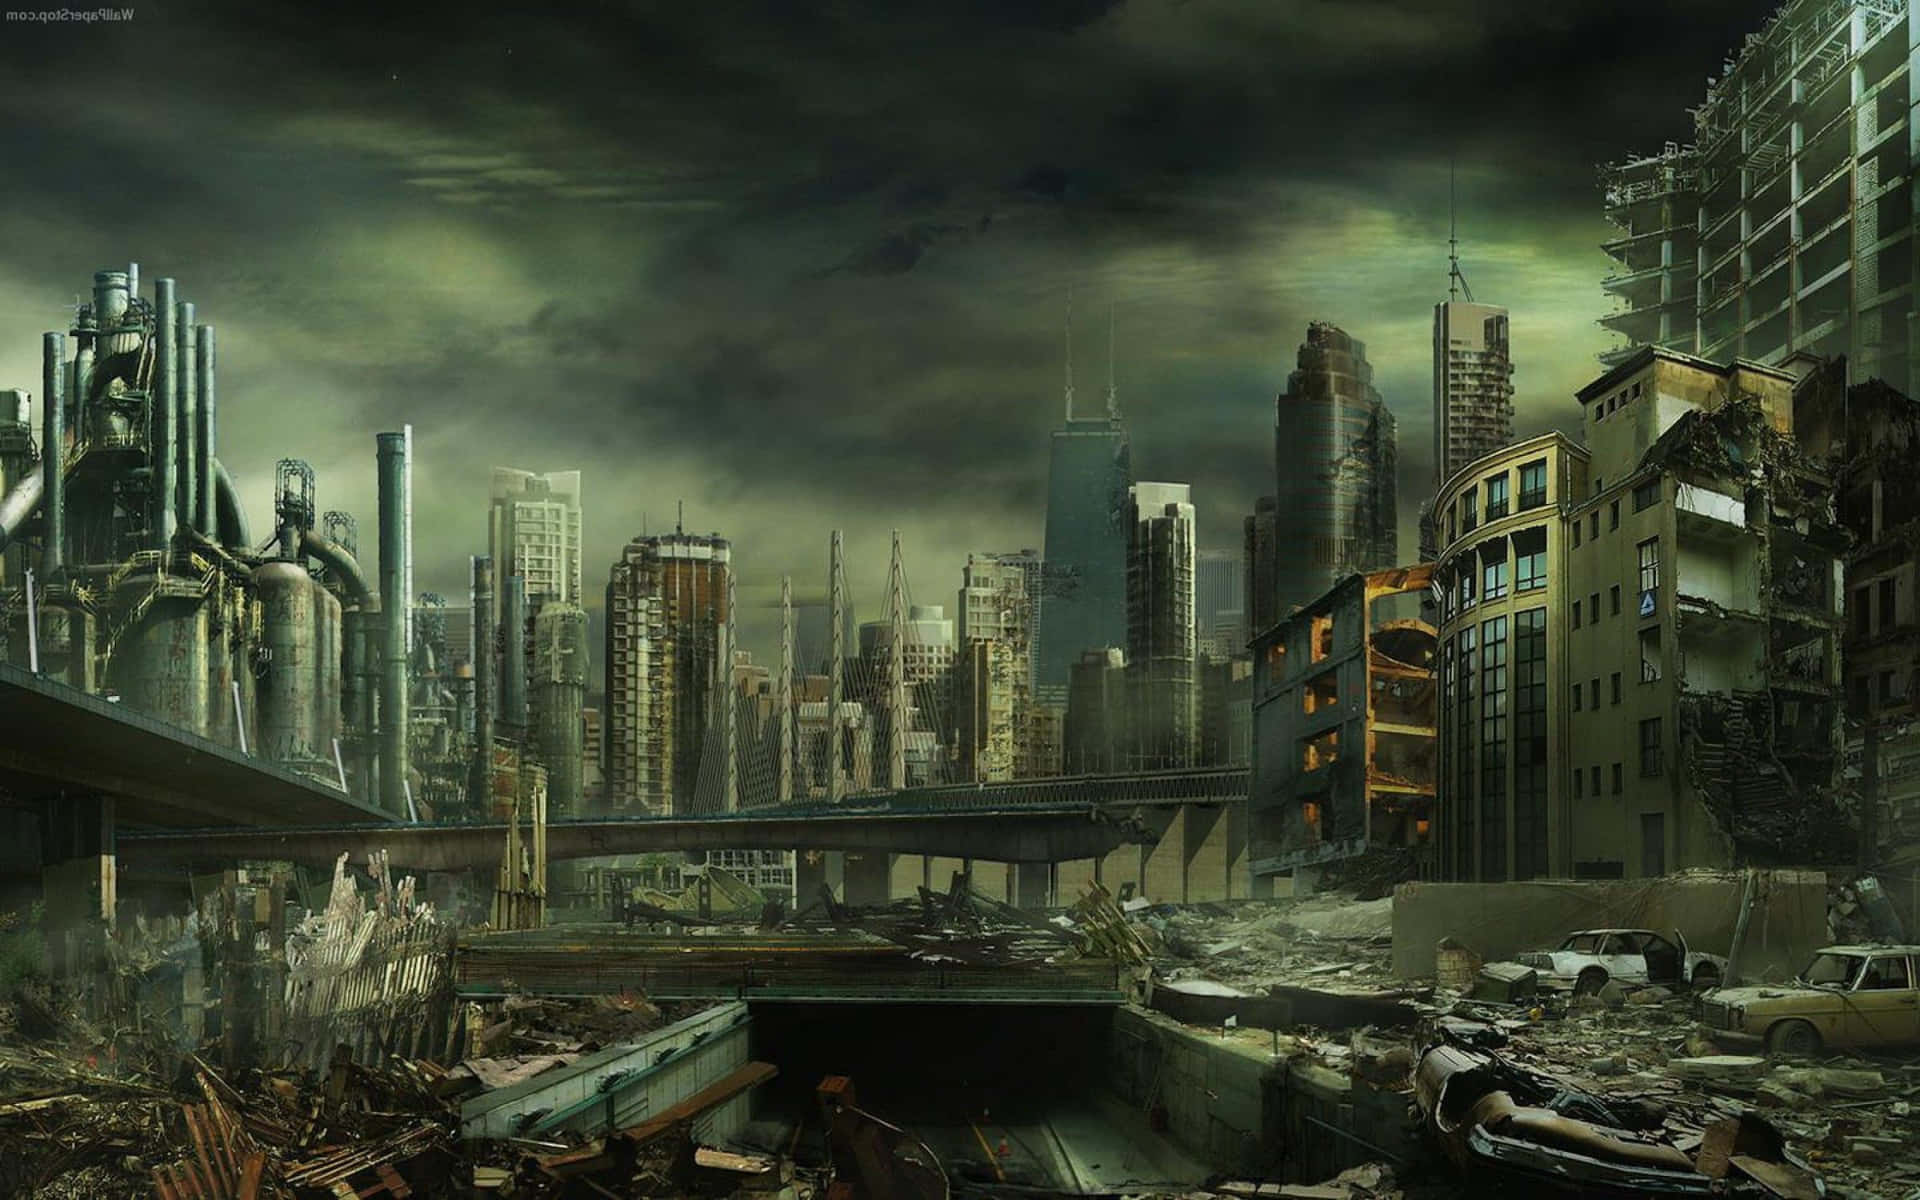 A Glimpse into a Post-Apocalyptic Cityscape